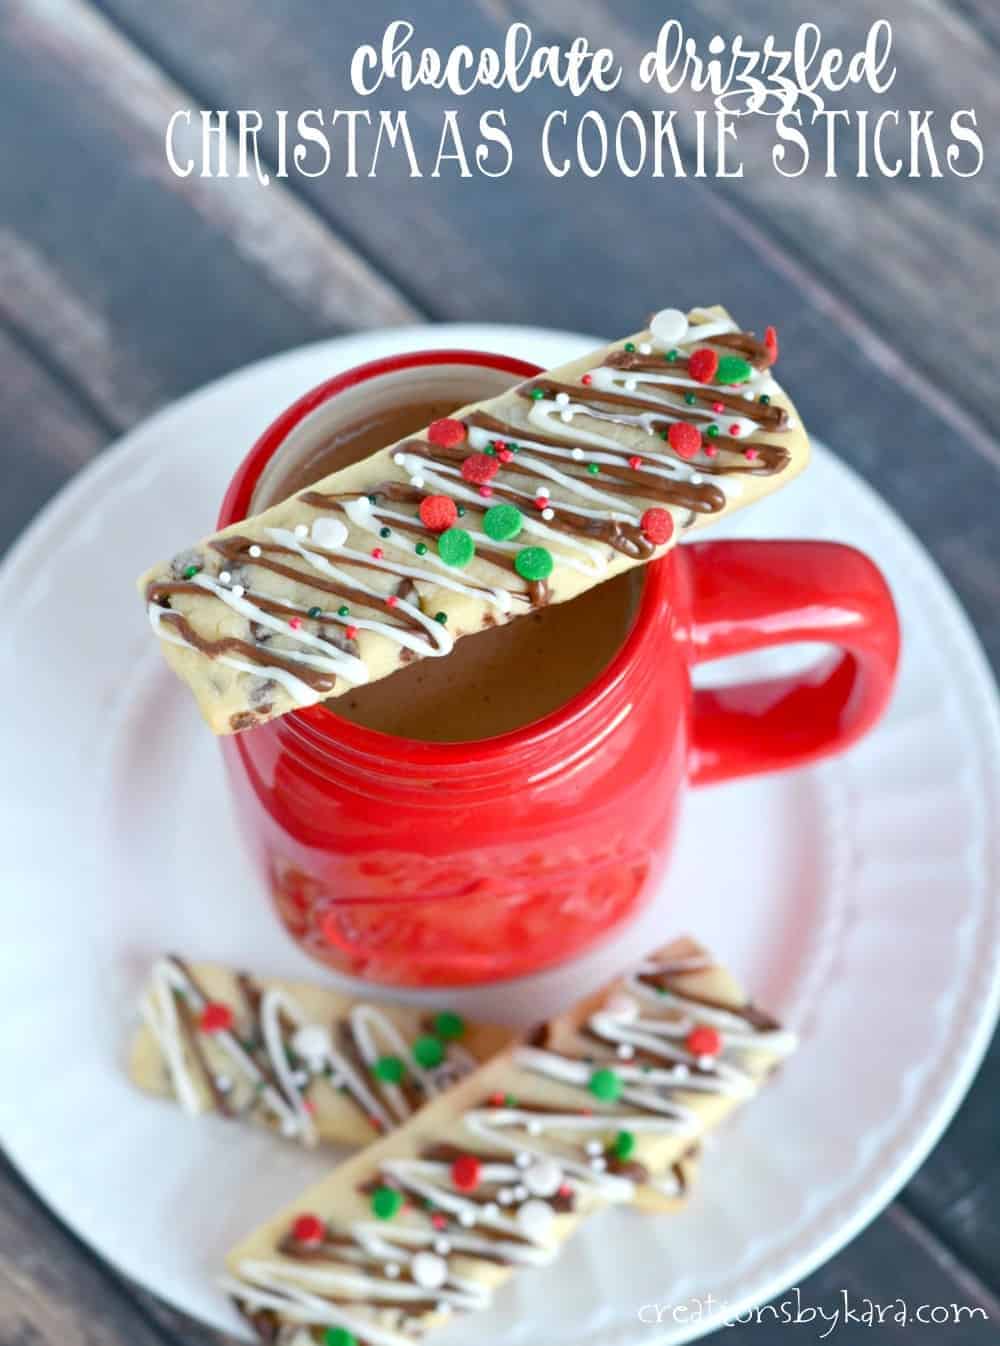 https://www.creationsbykara.com/wp-content/uploads/2016/12/Chocolate-Drizzled-Christmas-Cookie-Sticks-035-2.jpg